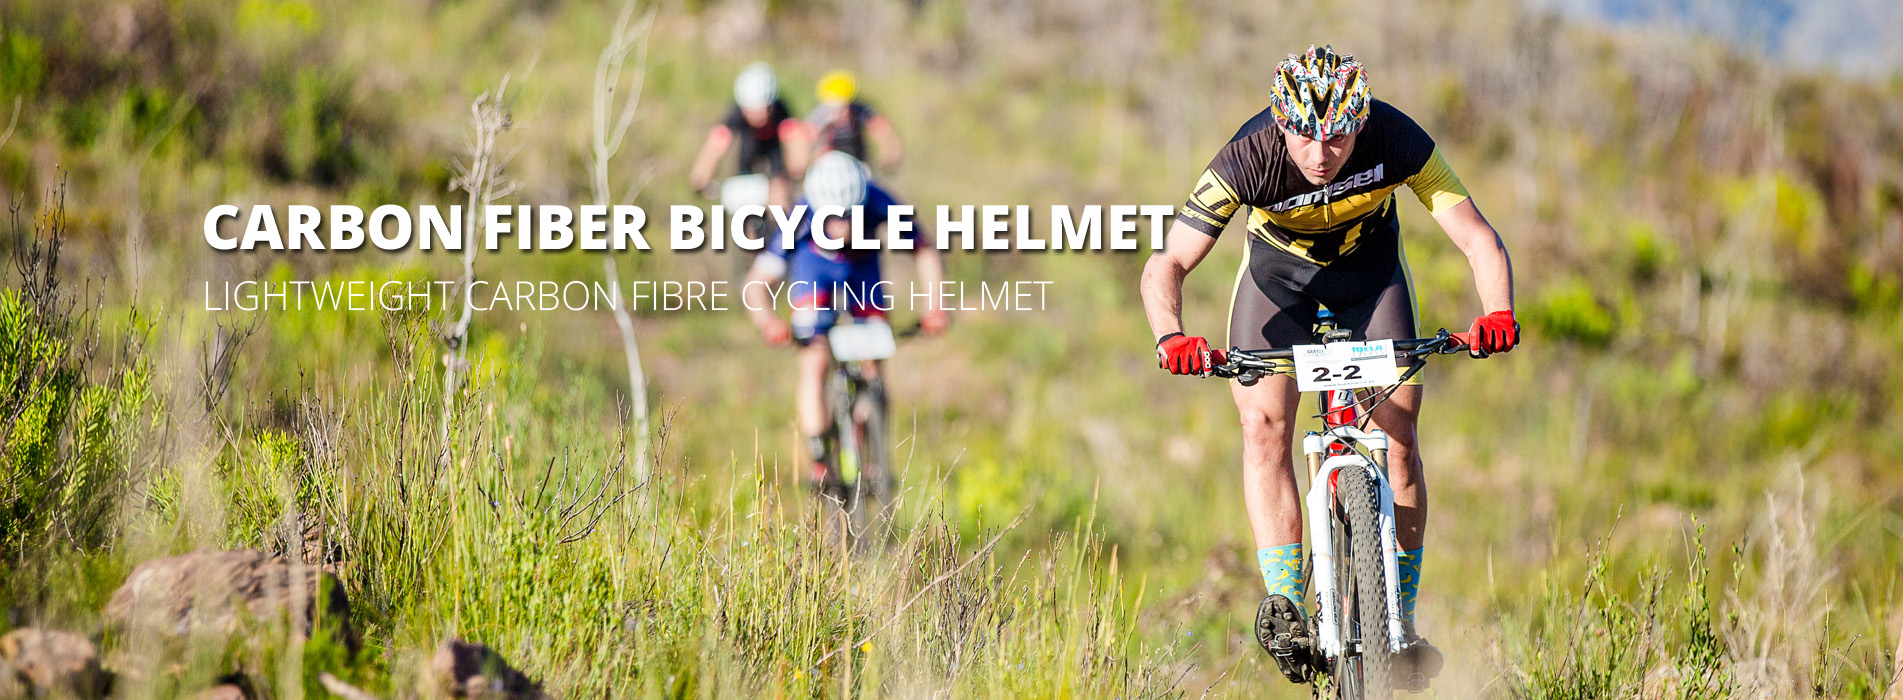 carbon fiber bicycle helmet bm26 banner